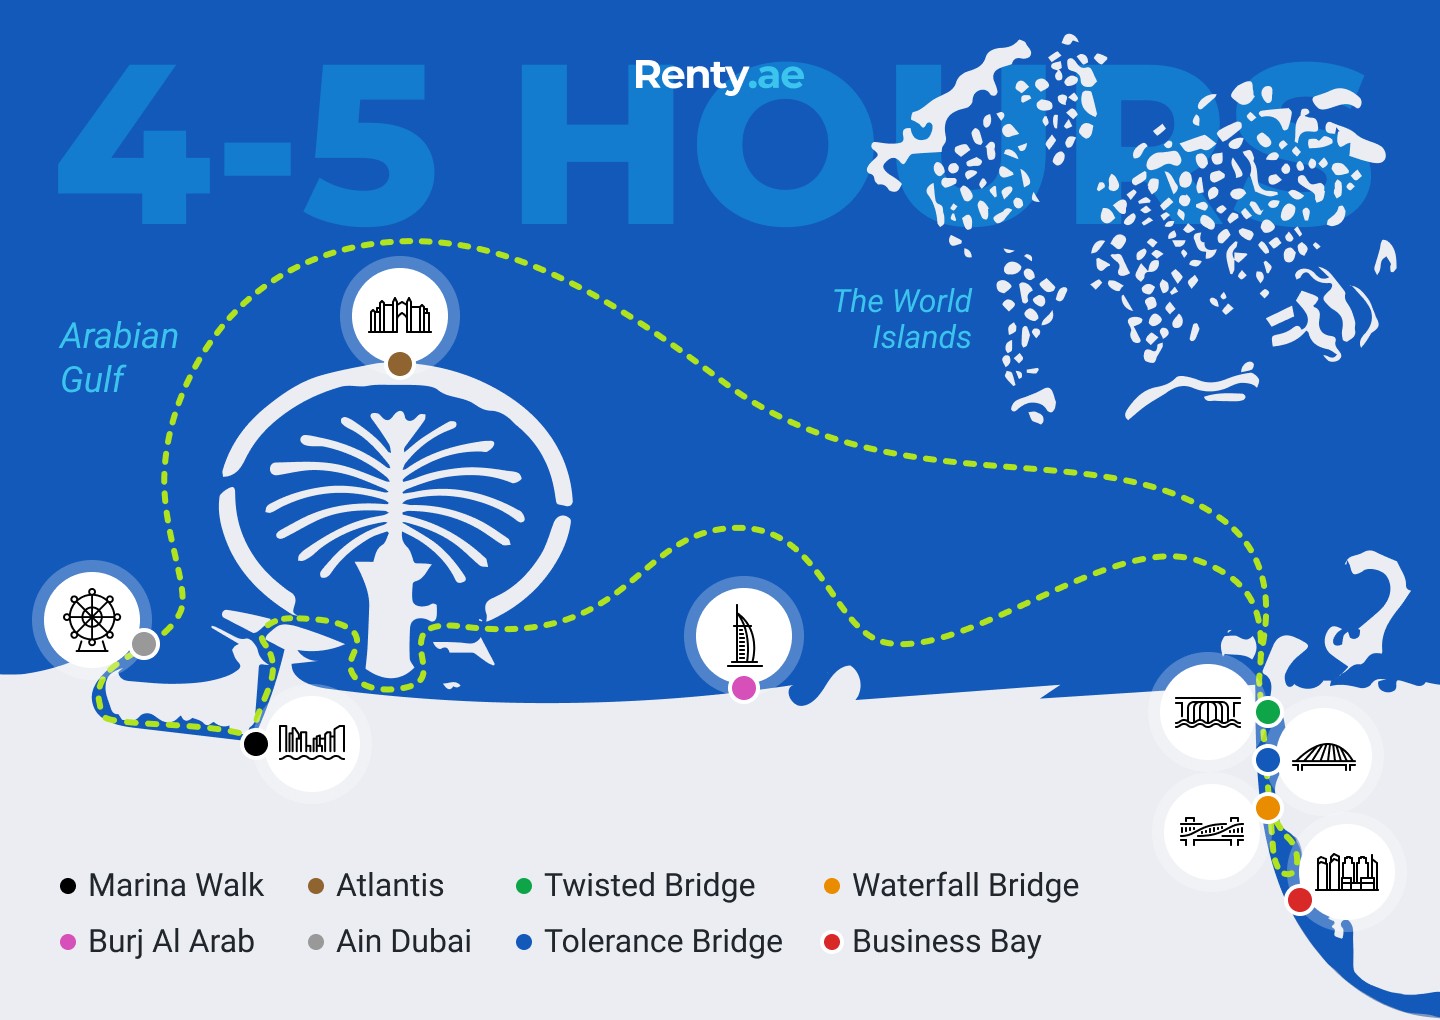 جولة على متن يخت في دبي - Dubai Water Canal Tour